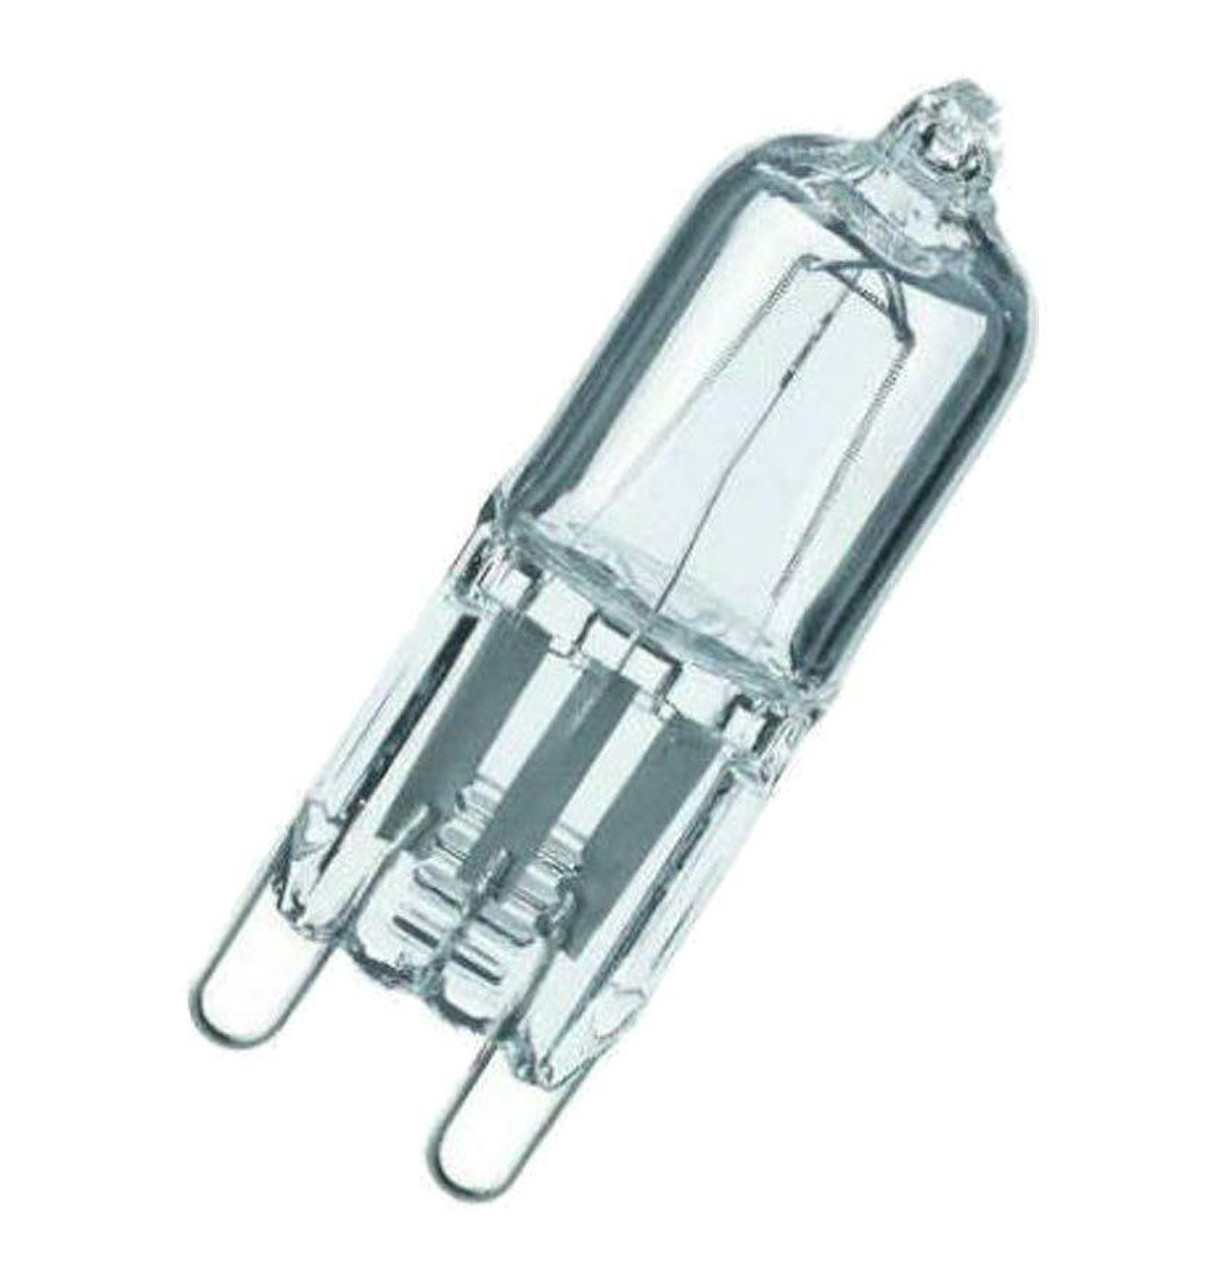 Sylvania Halogen Dim 2800K Direct Capsule 28W Lightbulbs | Clear G9